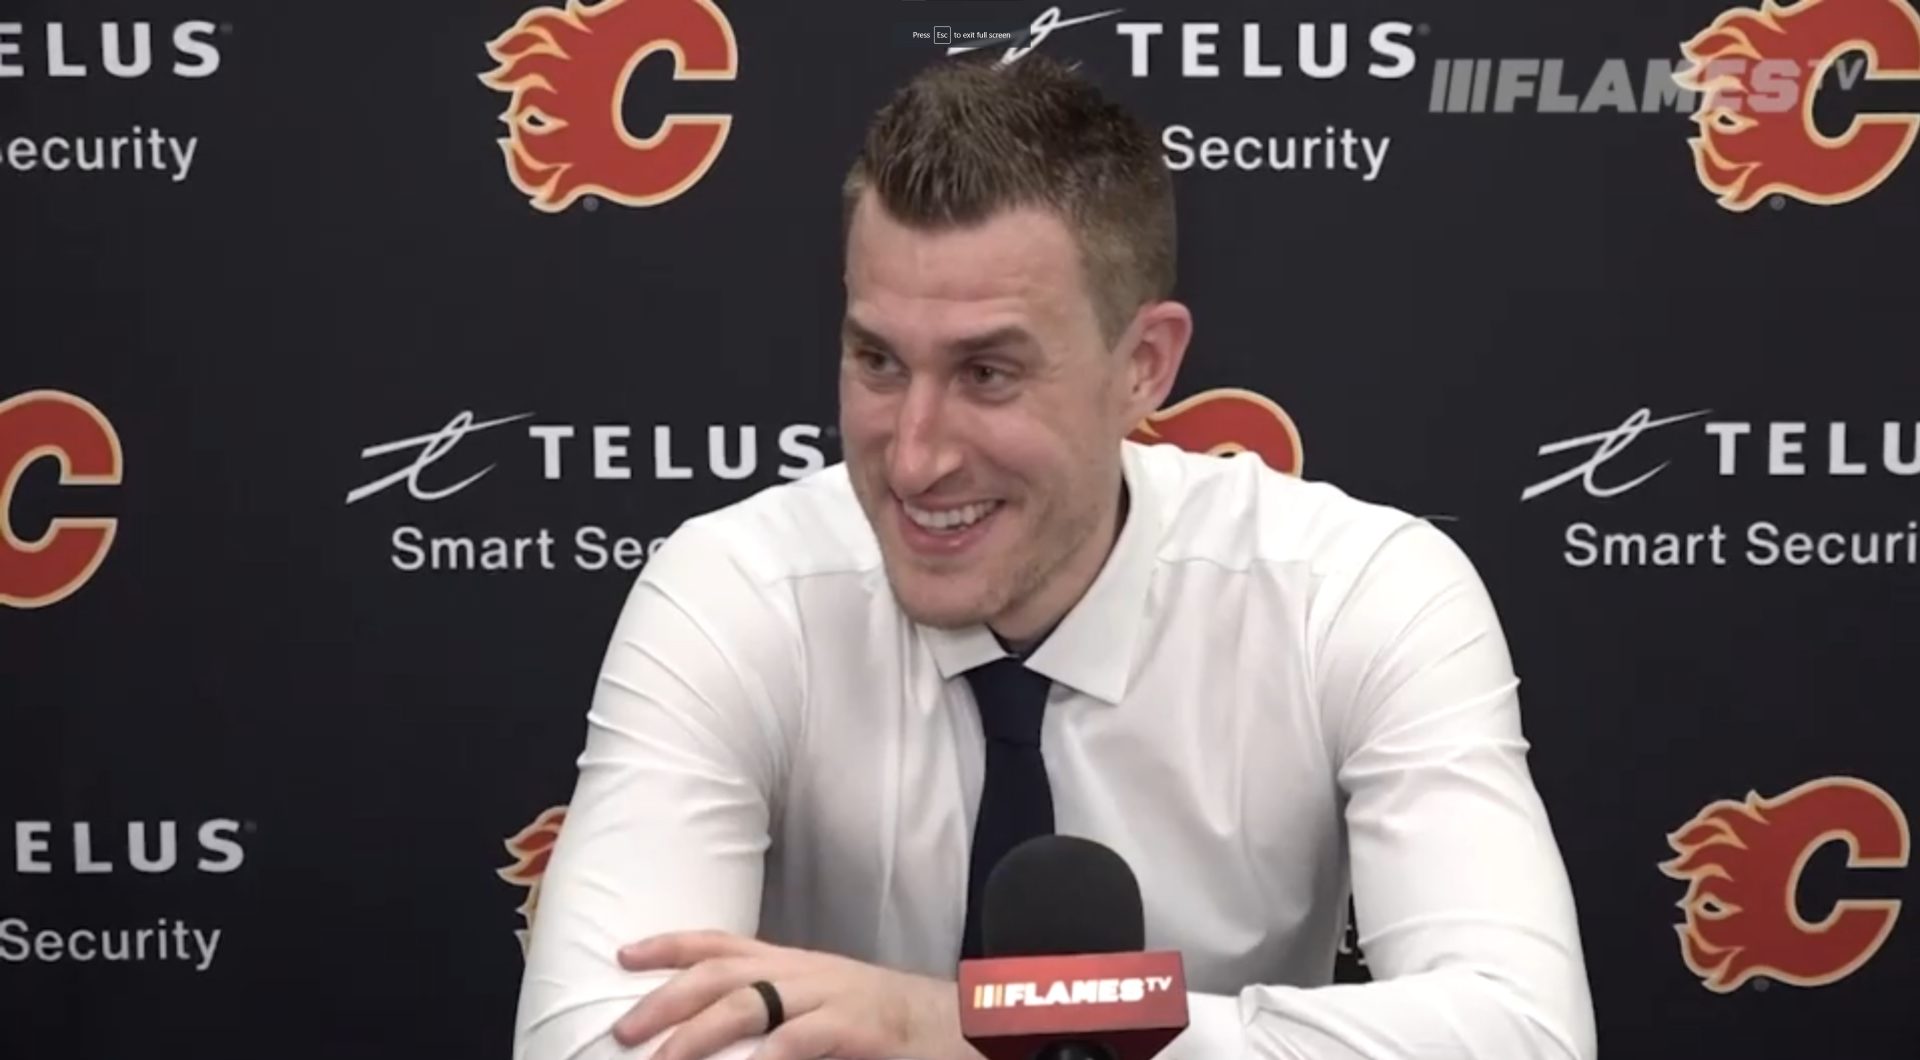 Michael Stone Signed Calgary Flames Jersey (Beckett COA) Career